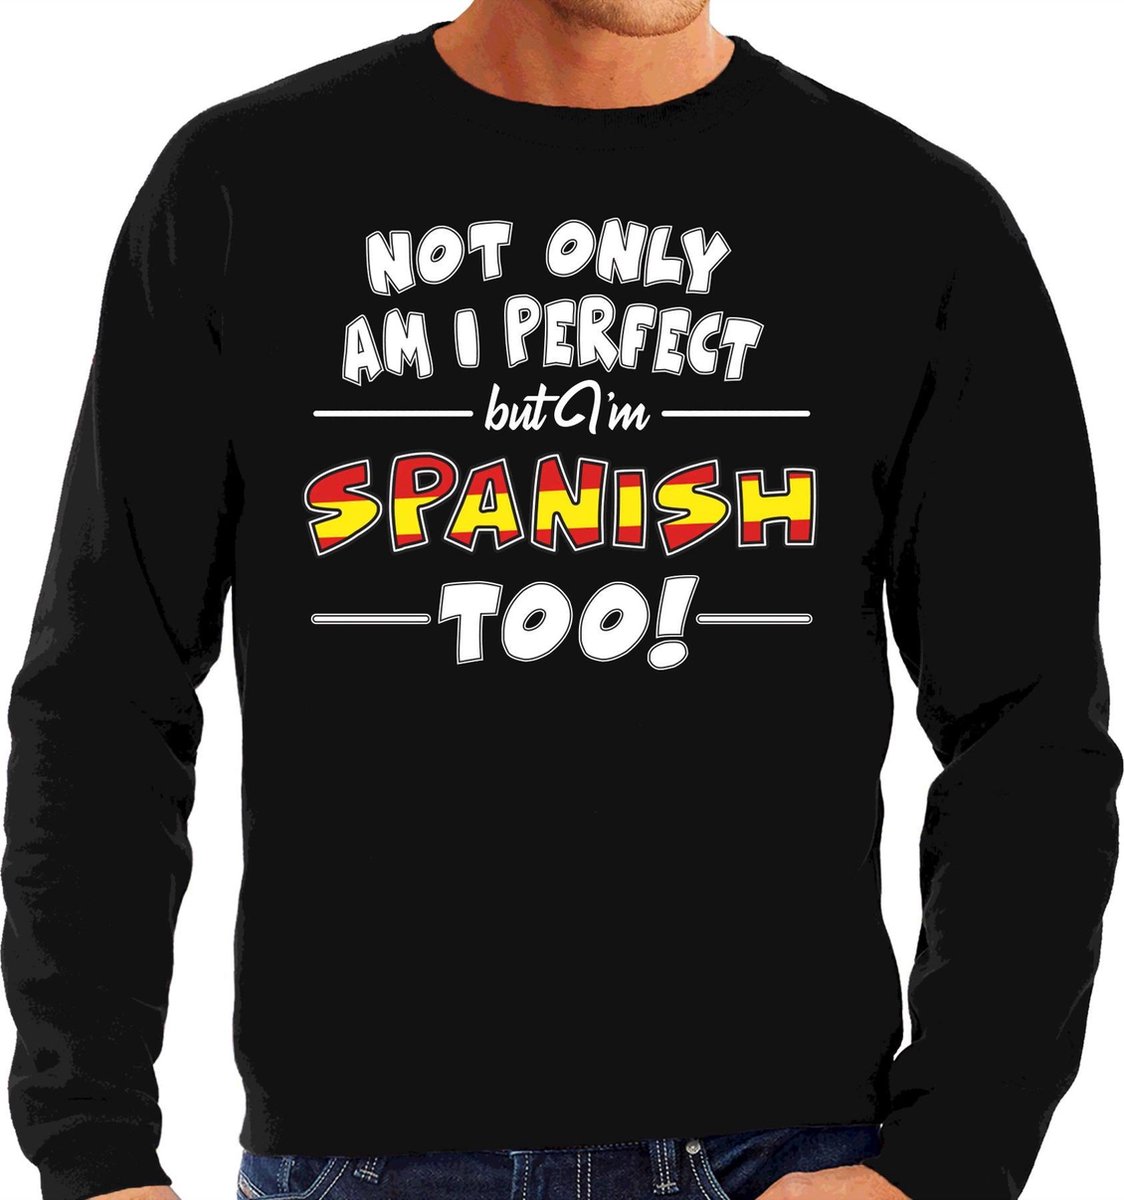 Not only am I perfect but im Spanish / Spaans too sweater - heren - zwart - Spanje cadeau trui XXL